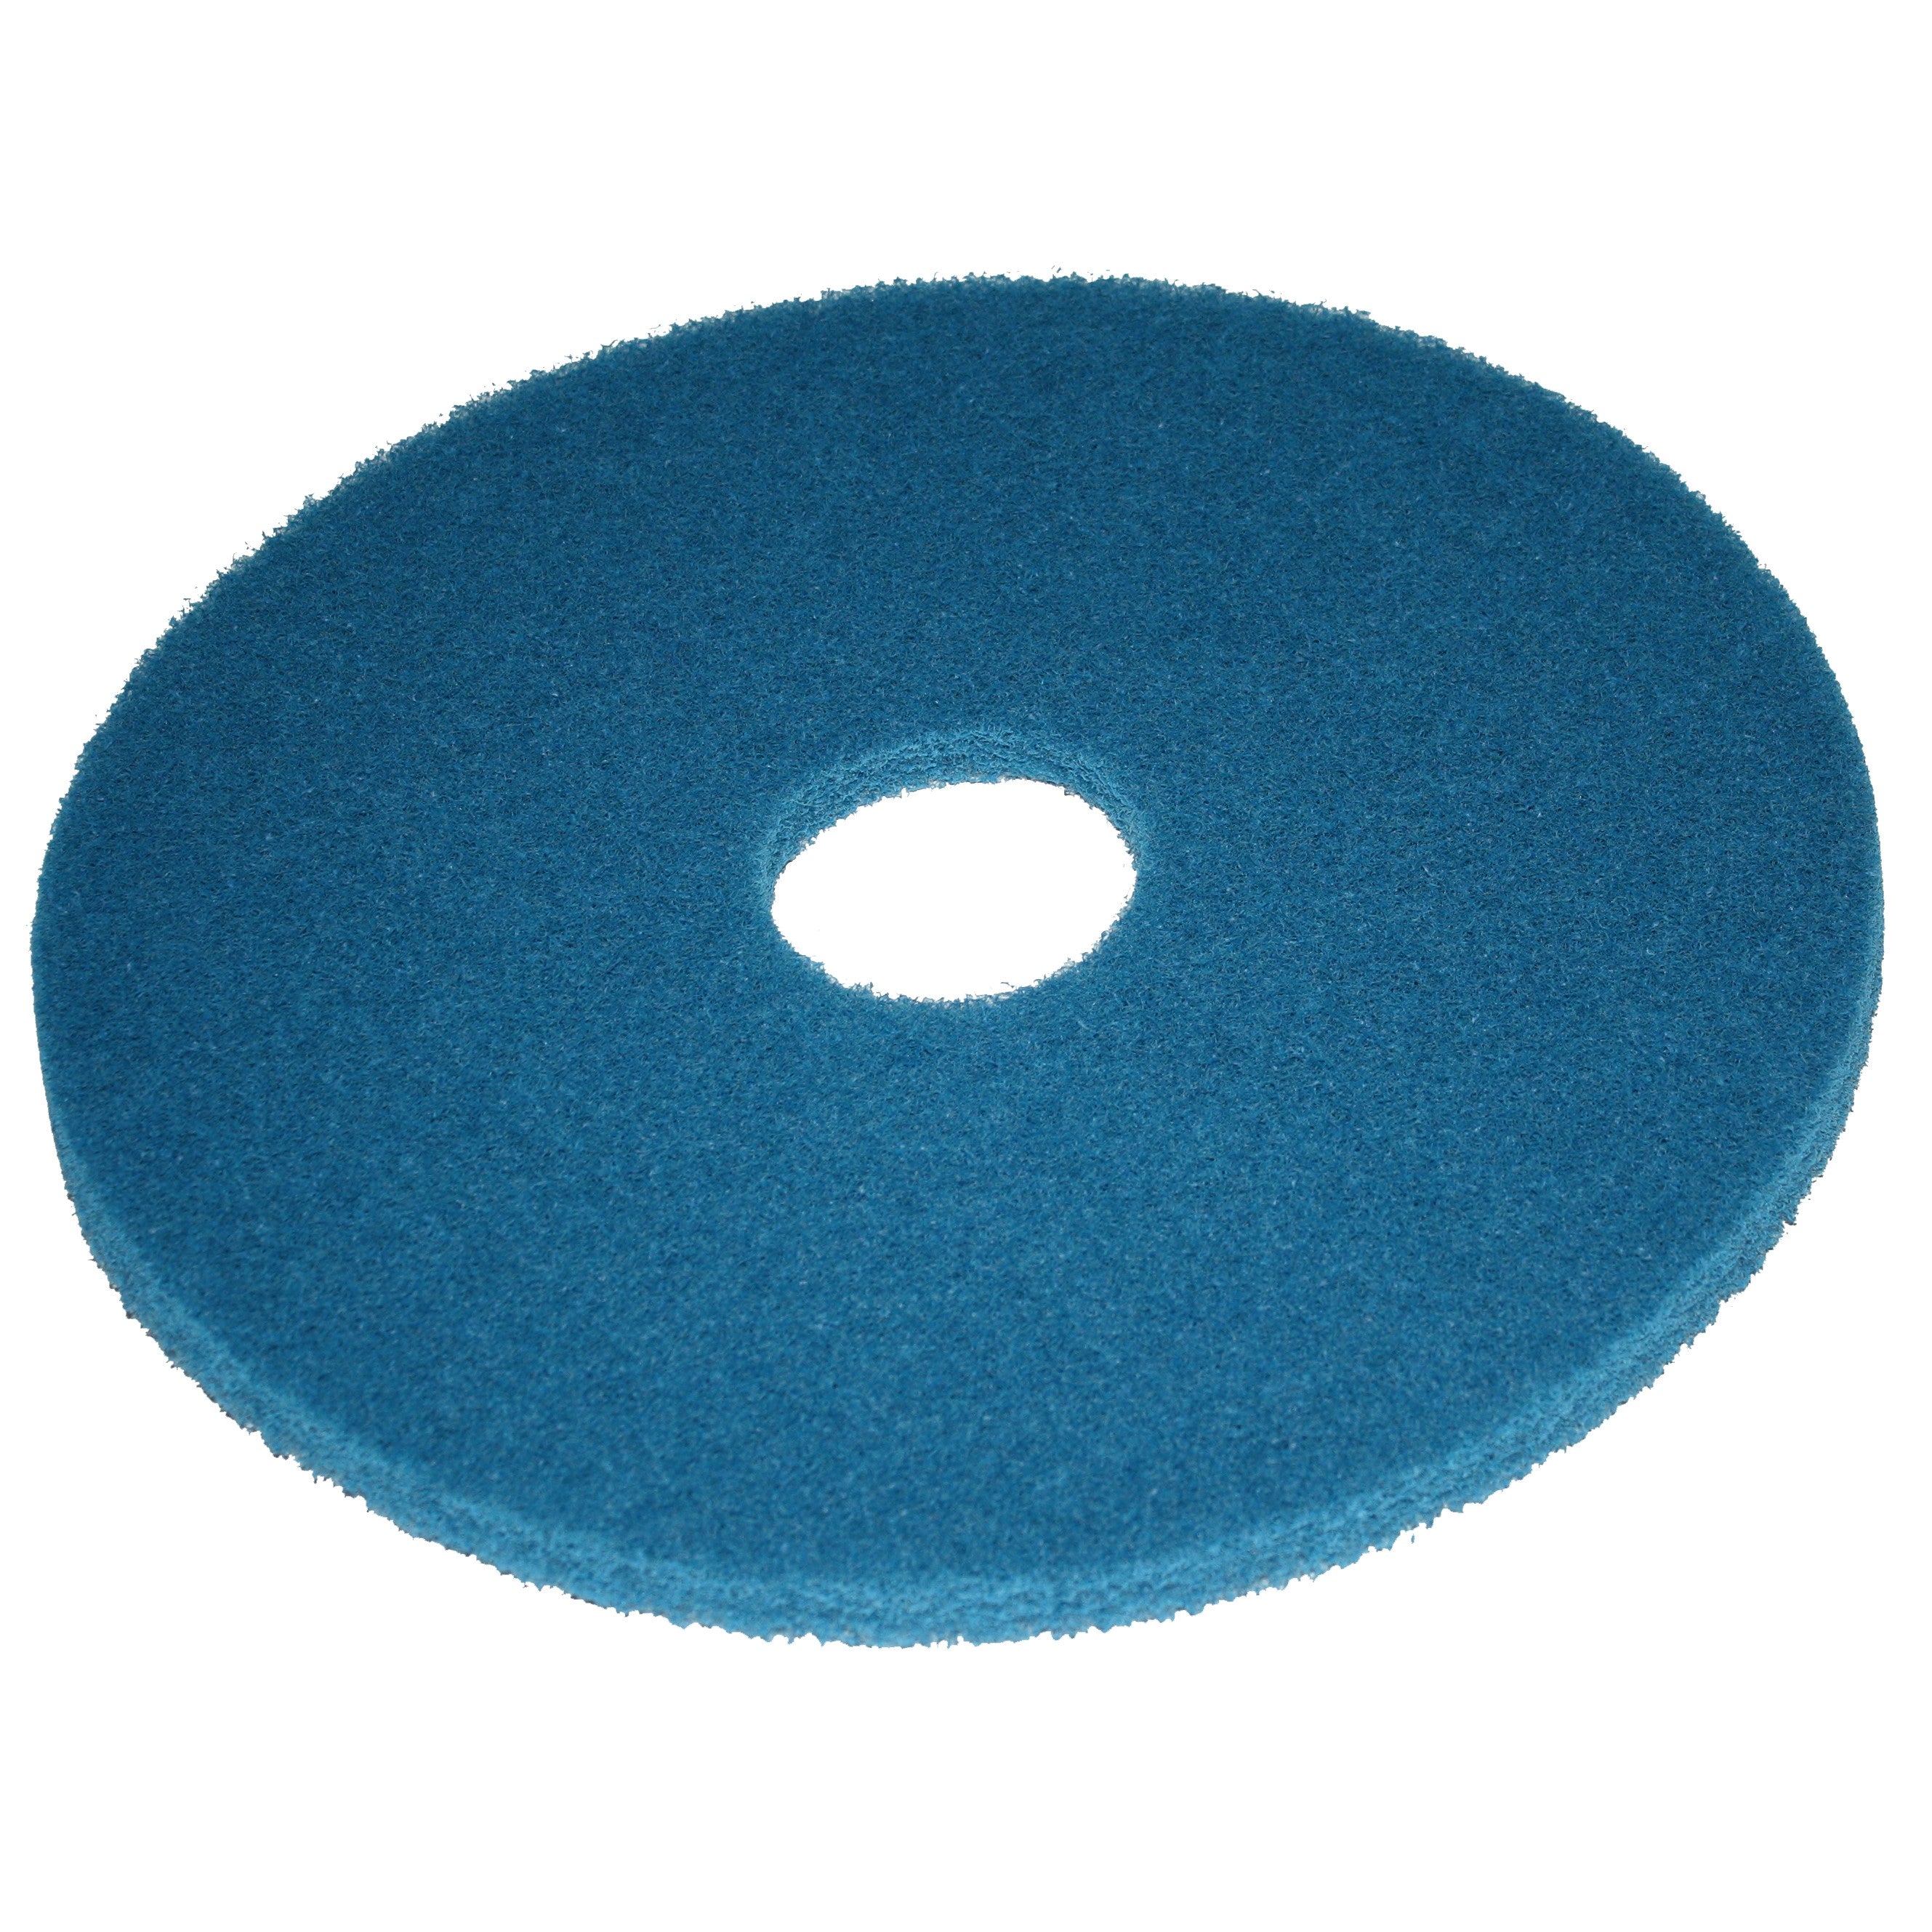 Pad blau, Ø 165 mm, Polyester